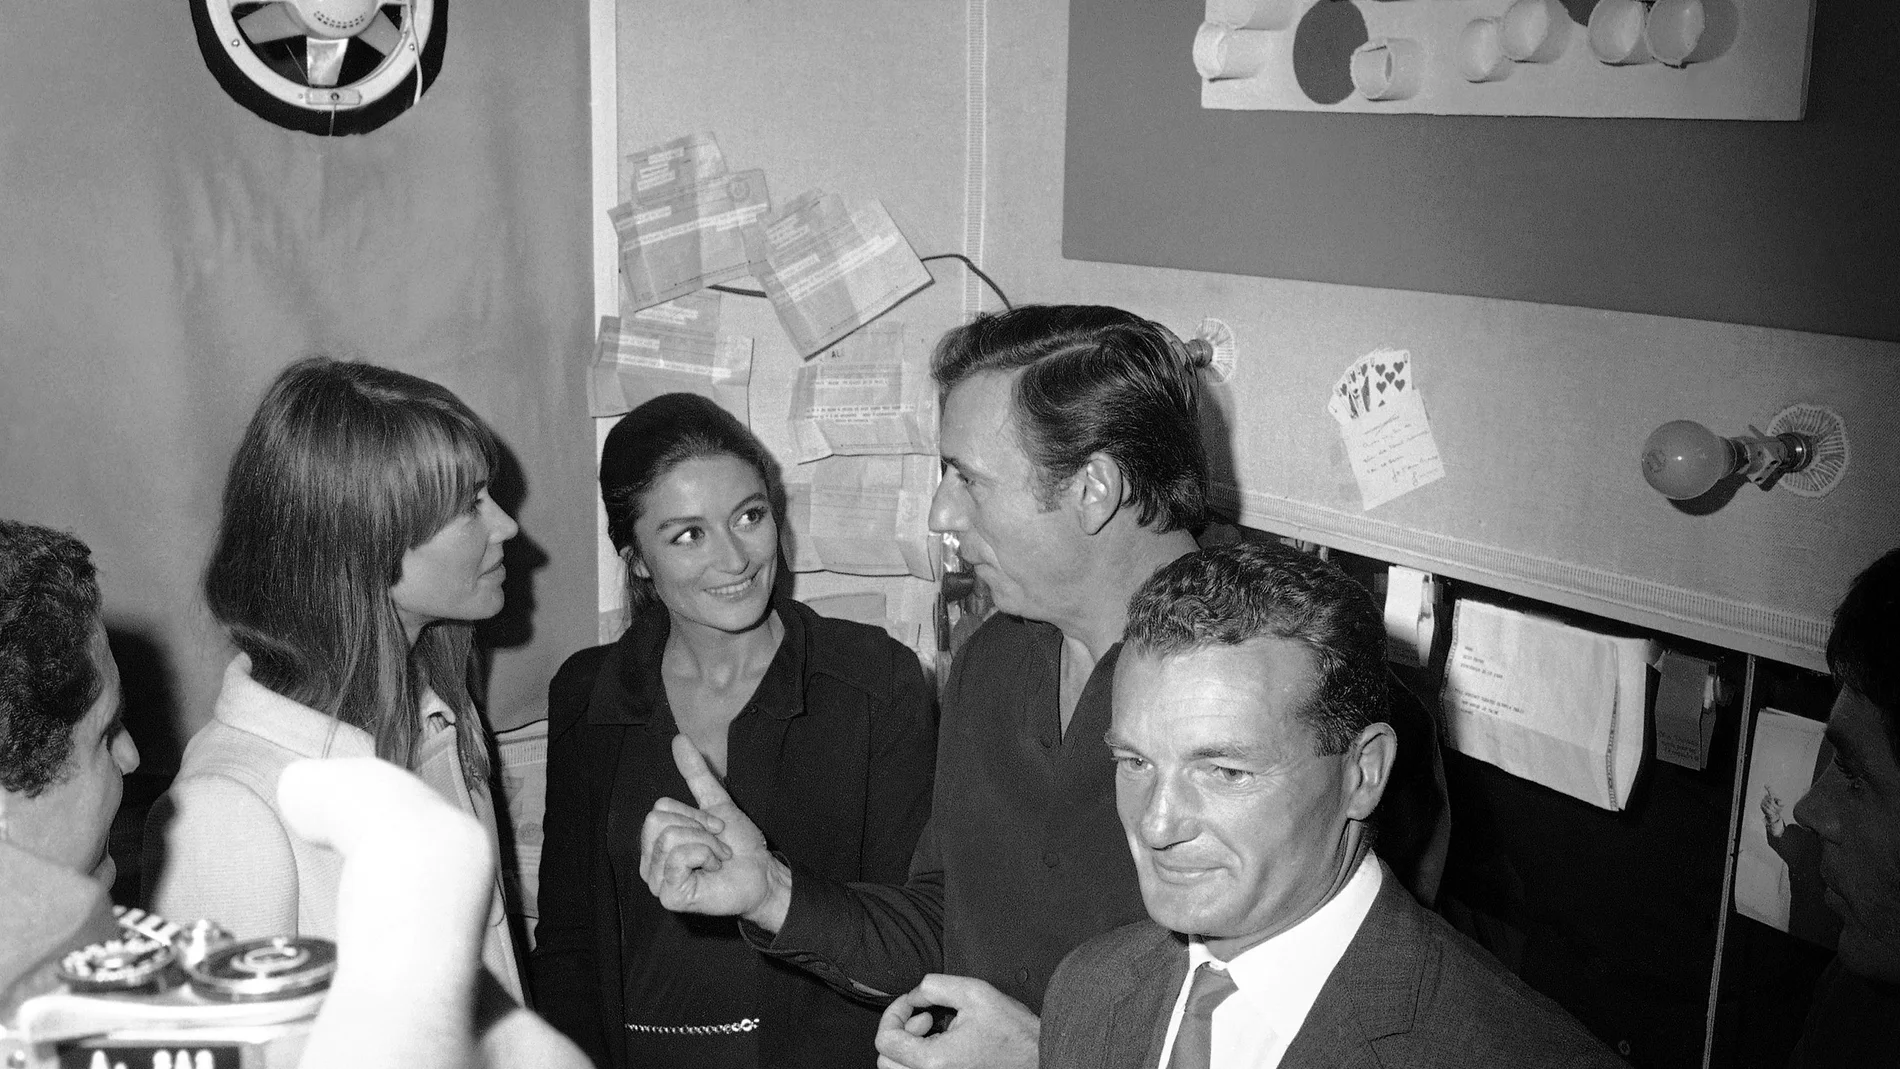  Francoise Hardy, Anouk Aime, Yves Montand y Eric Tabarly en una imagen de archivo.